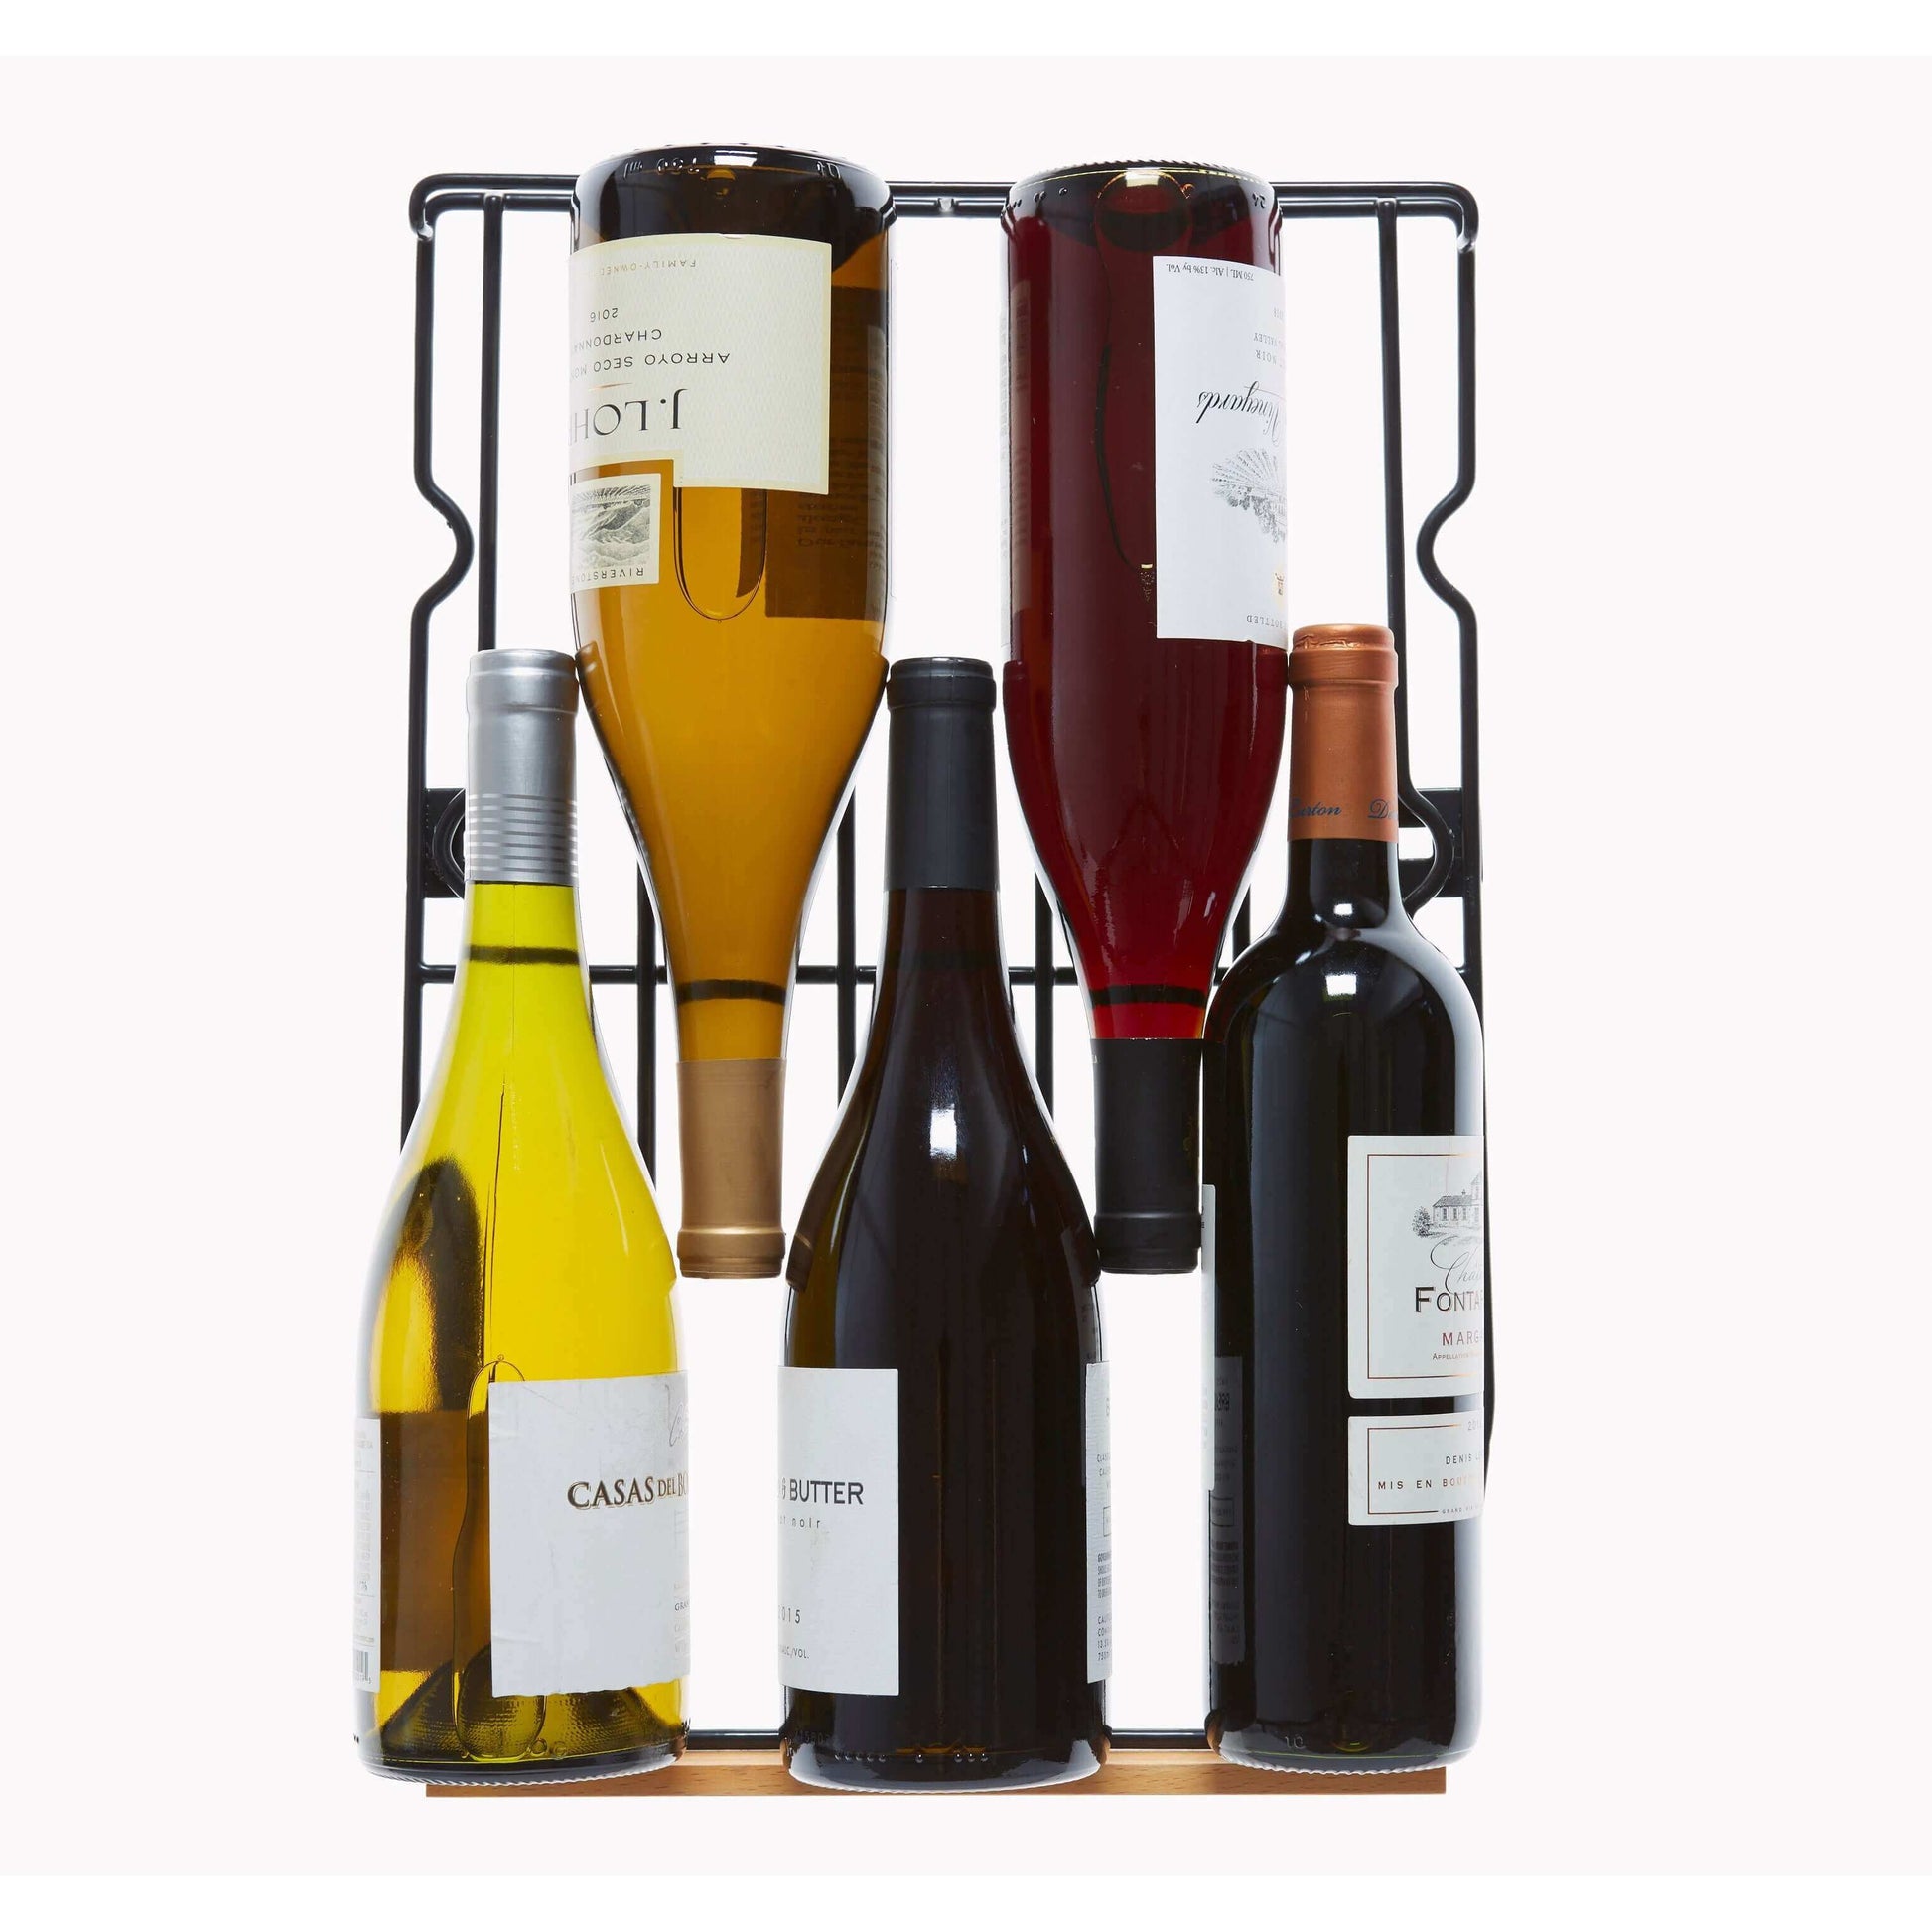 Smith & Hanks 34 Bottle Single Zone Under Counter Wine Cooler